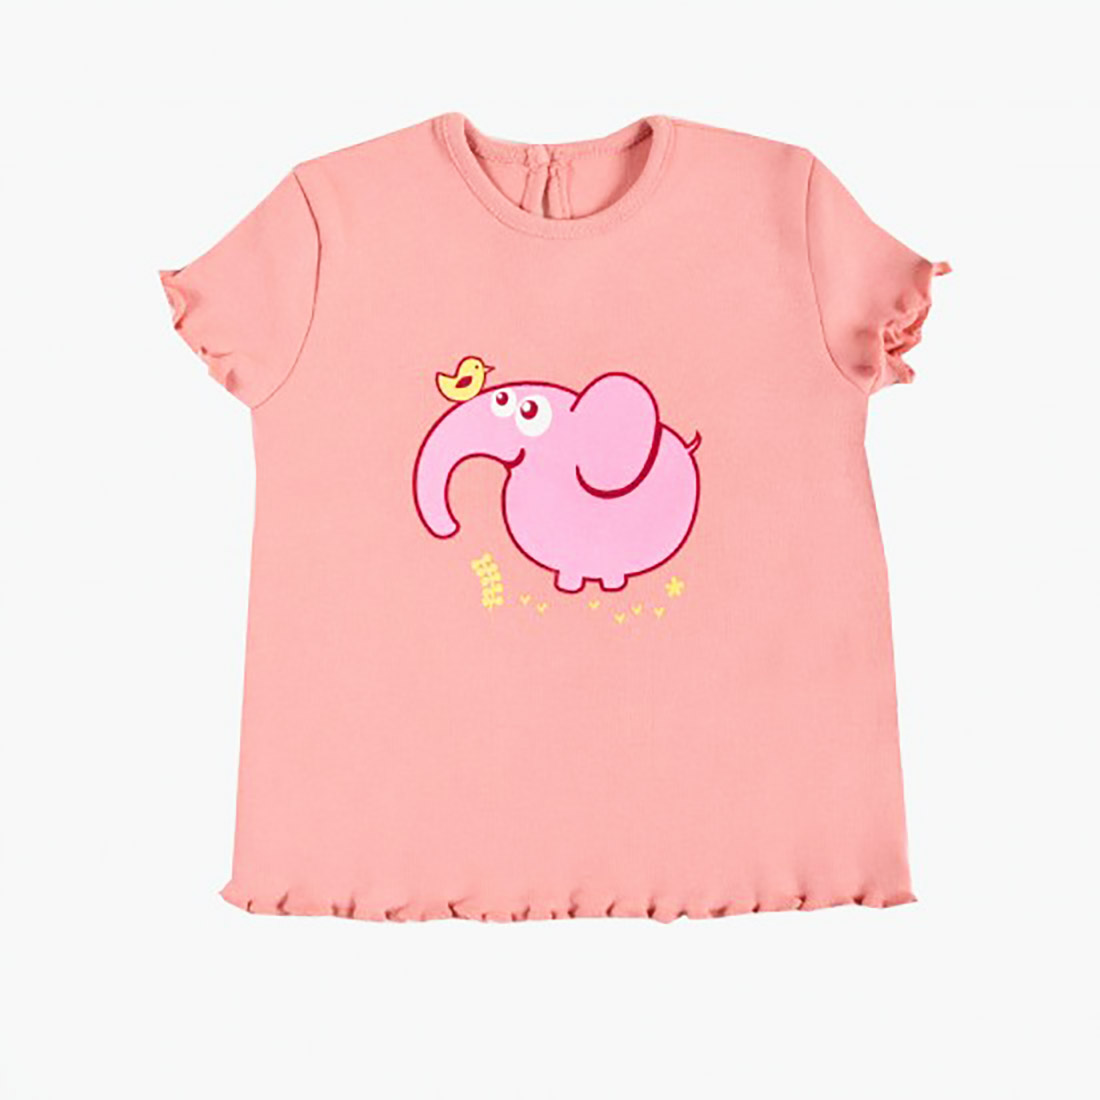 OrganicEra Organic T-shirt, Pink Elephant